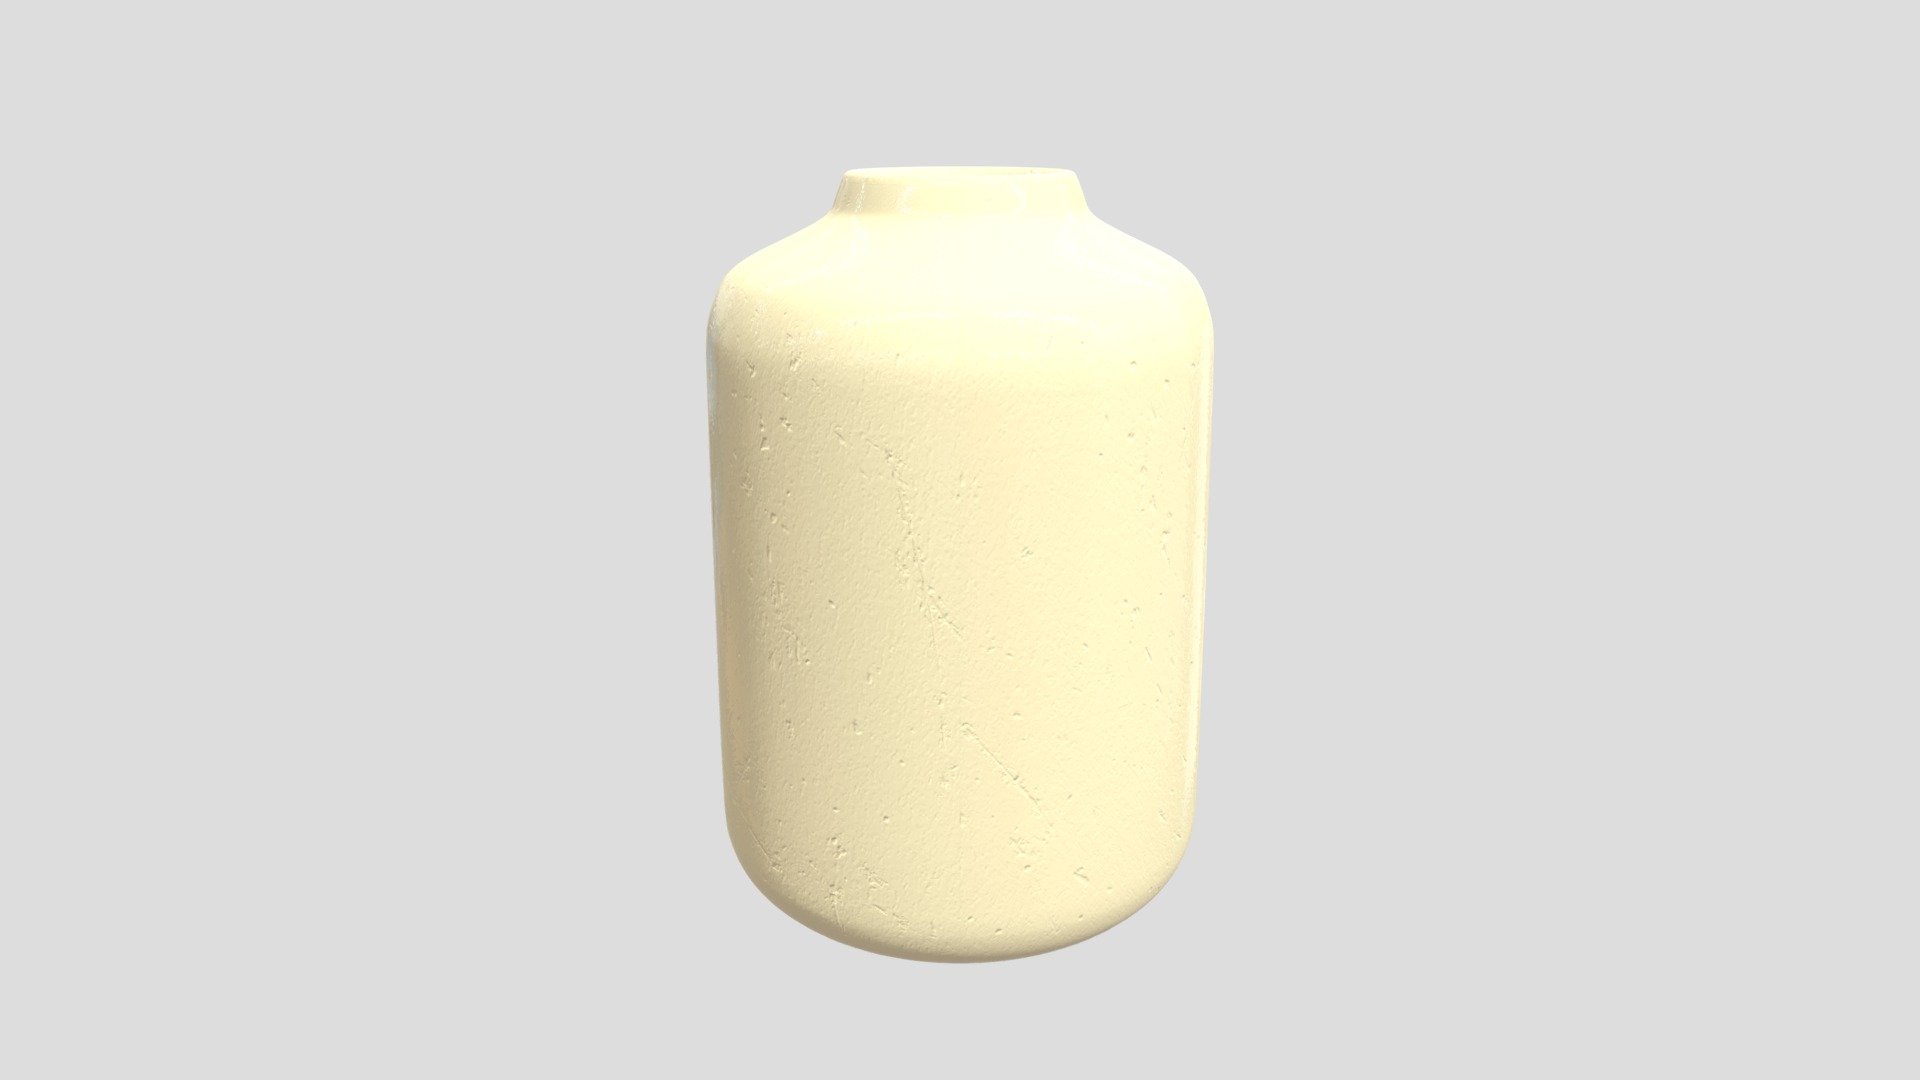 procreate 3d project with beta 5.2 - Ceramic Vase - 3D model by cozycottage 3d model